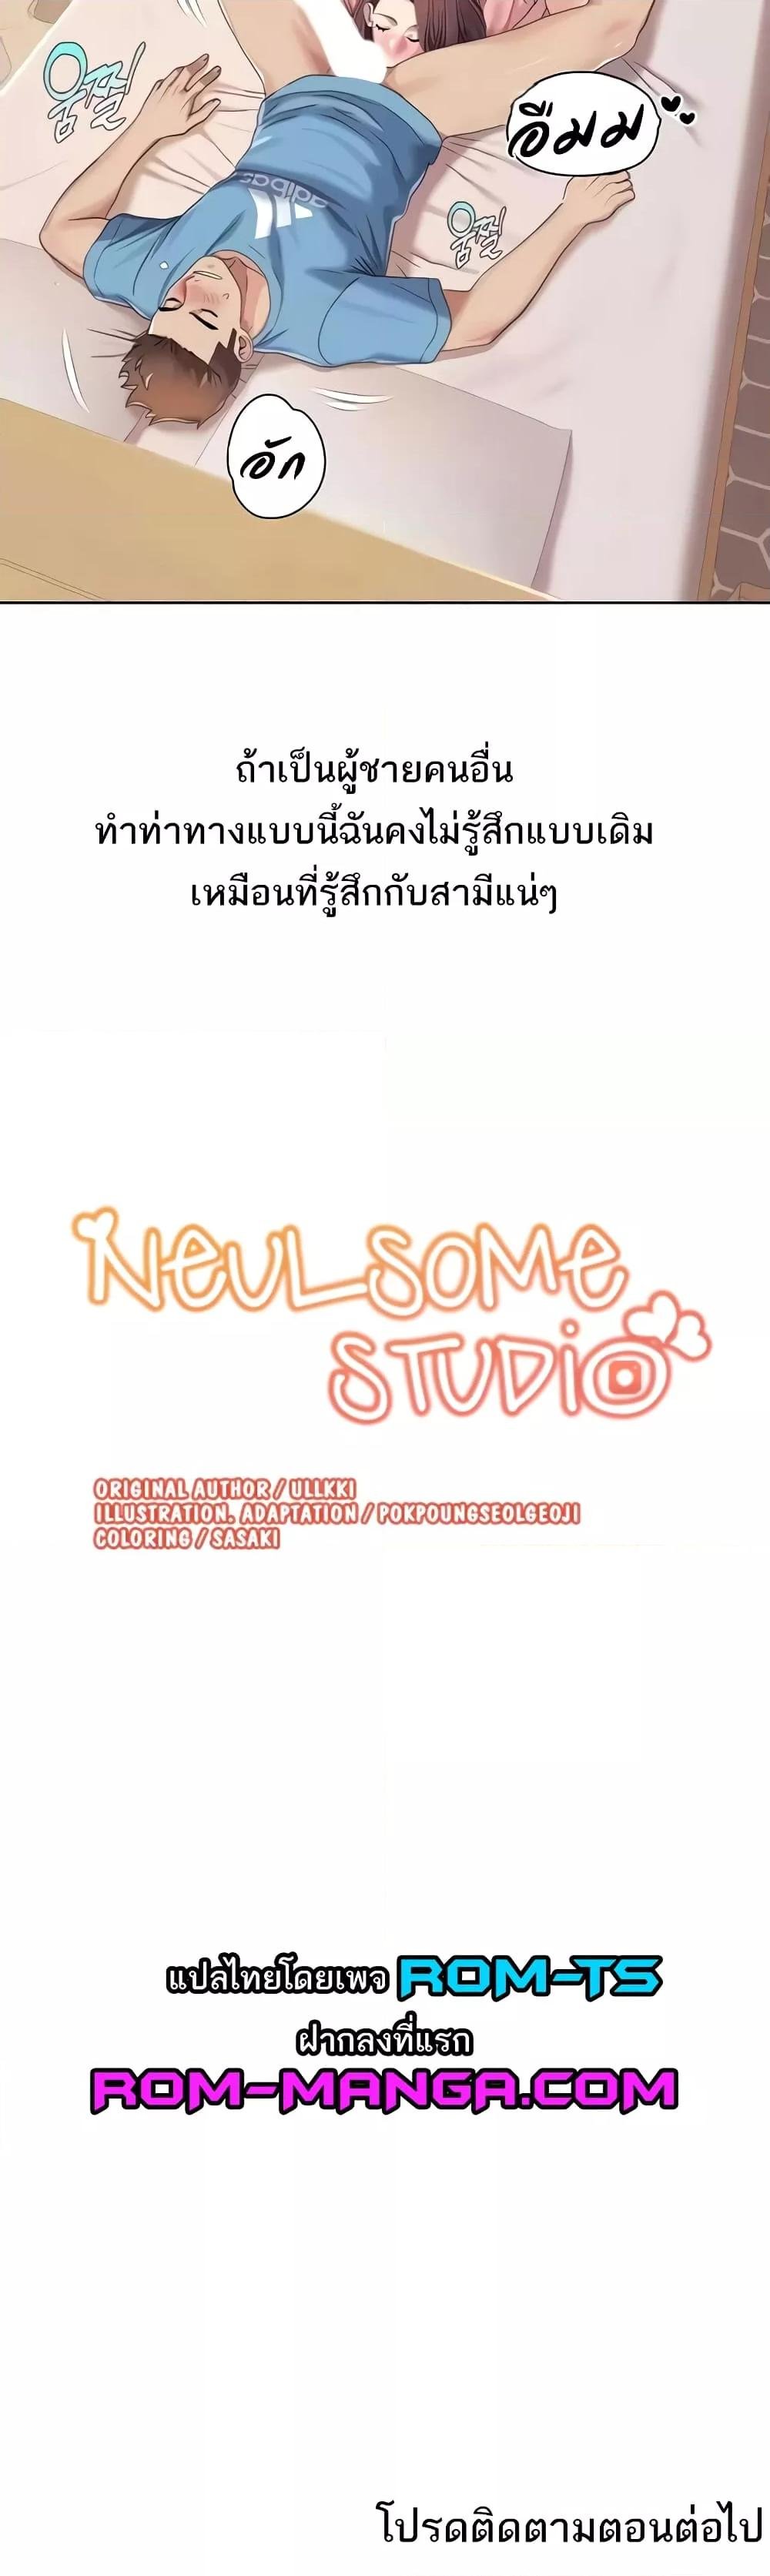 Neulsome Studio 24 30